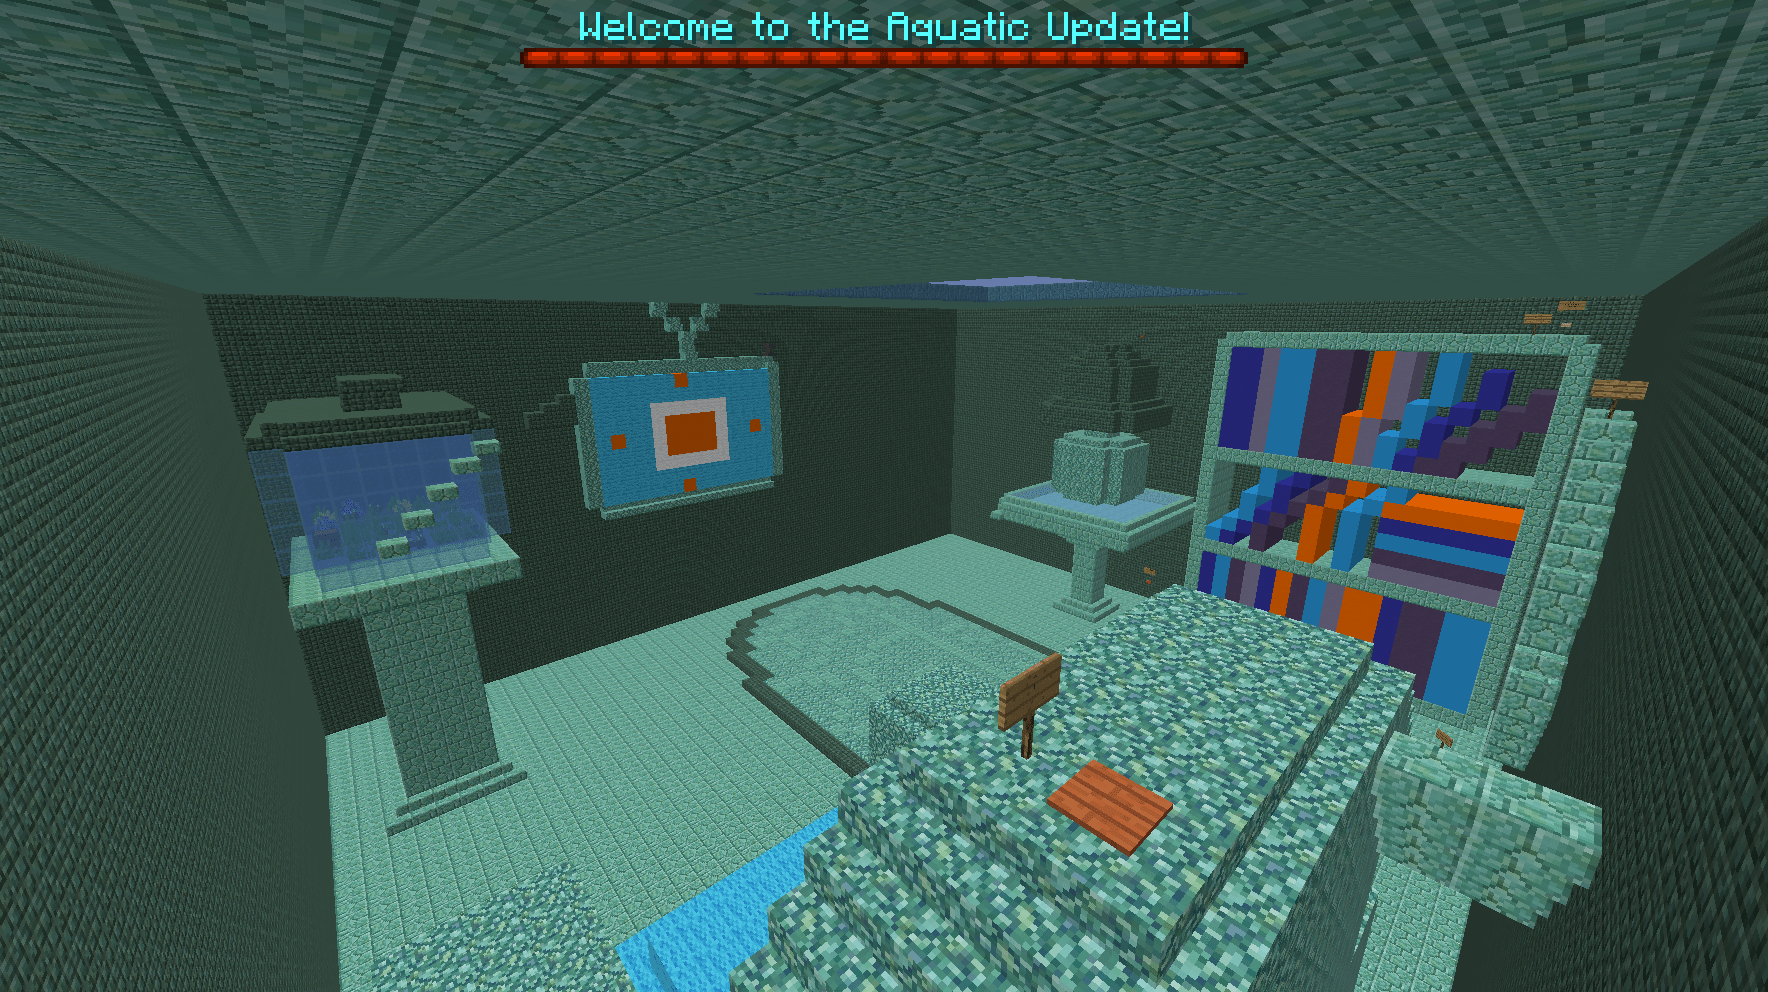 The Aquatic Update